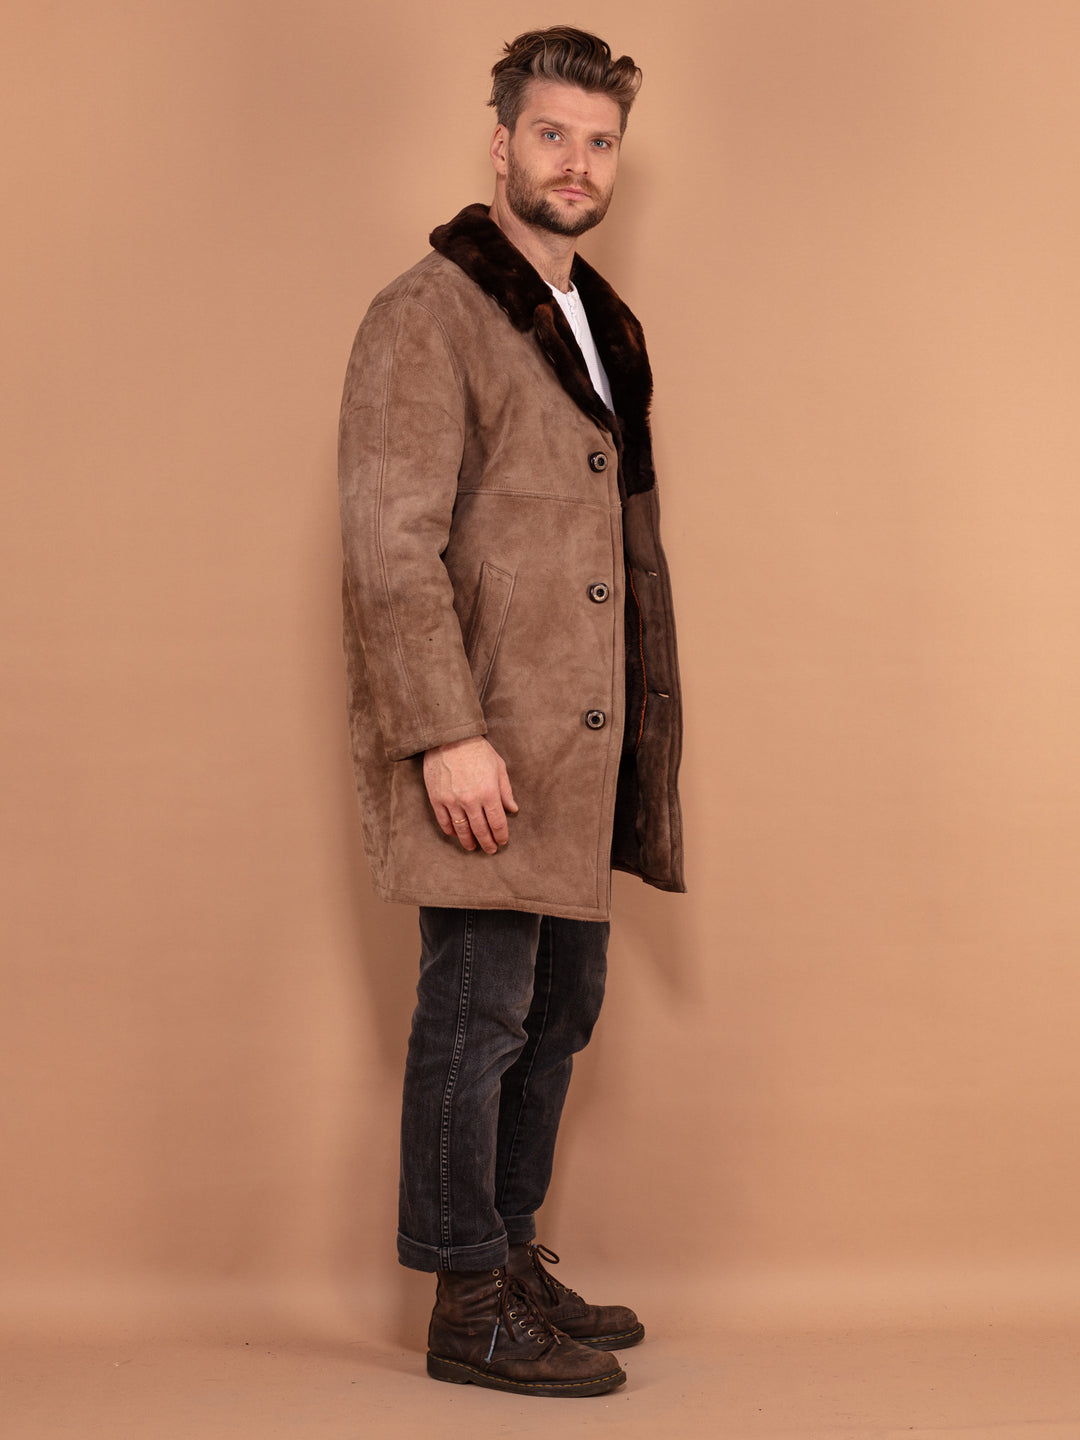 Sheepskin Suede Coat 70's, Size Medium, Vintage Men Winter Coat, Brown Retro Coat, Western Style Boho 70s Clothing, Sheep Fur Shearling Coat